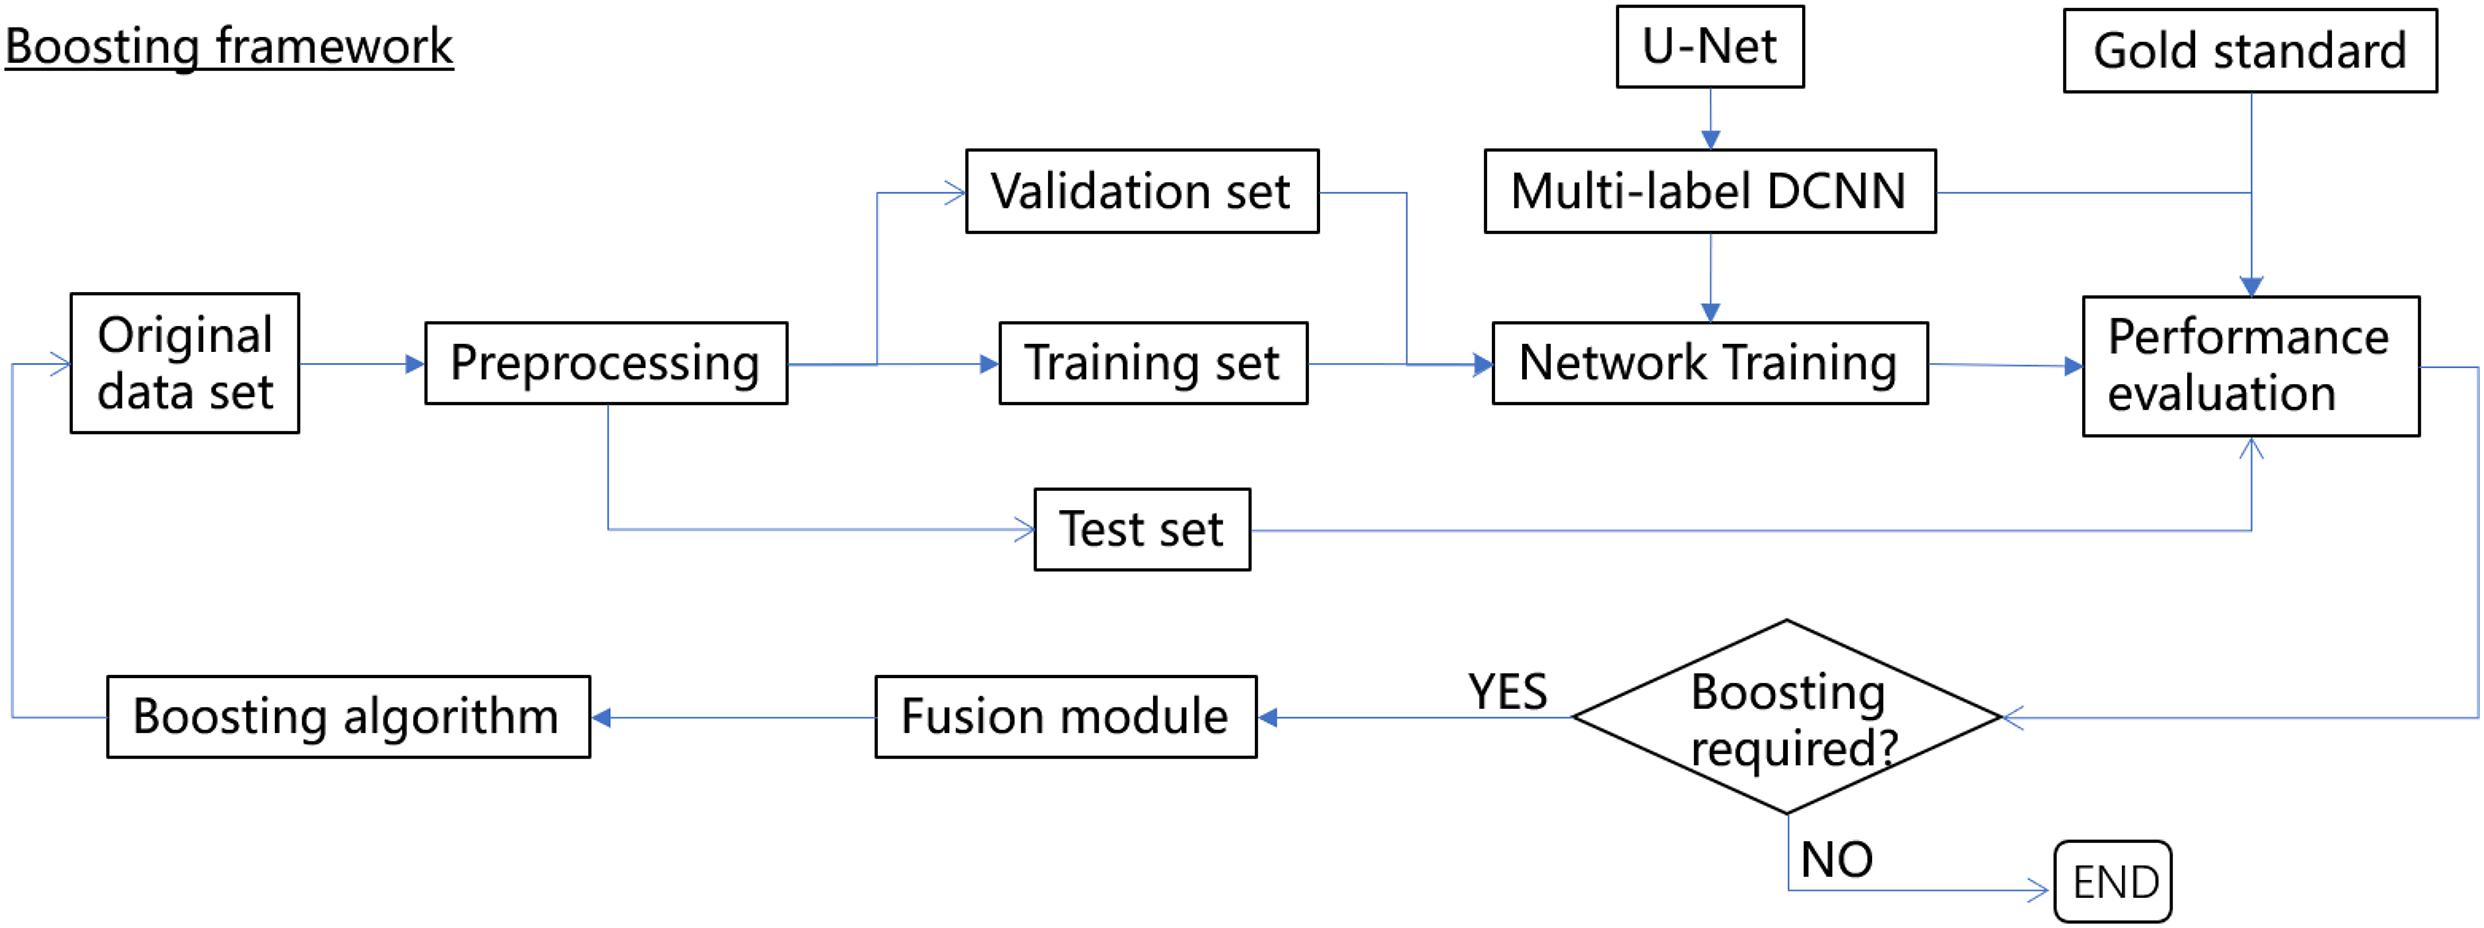 Creating Balanced Multi-Label Datasets for Model Training and Evaluation., by Pixelatedbrian, GumGum Tech Blog